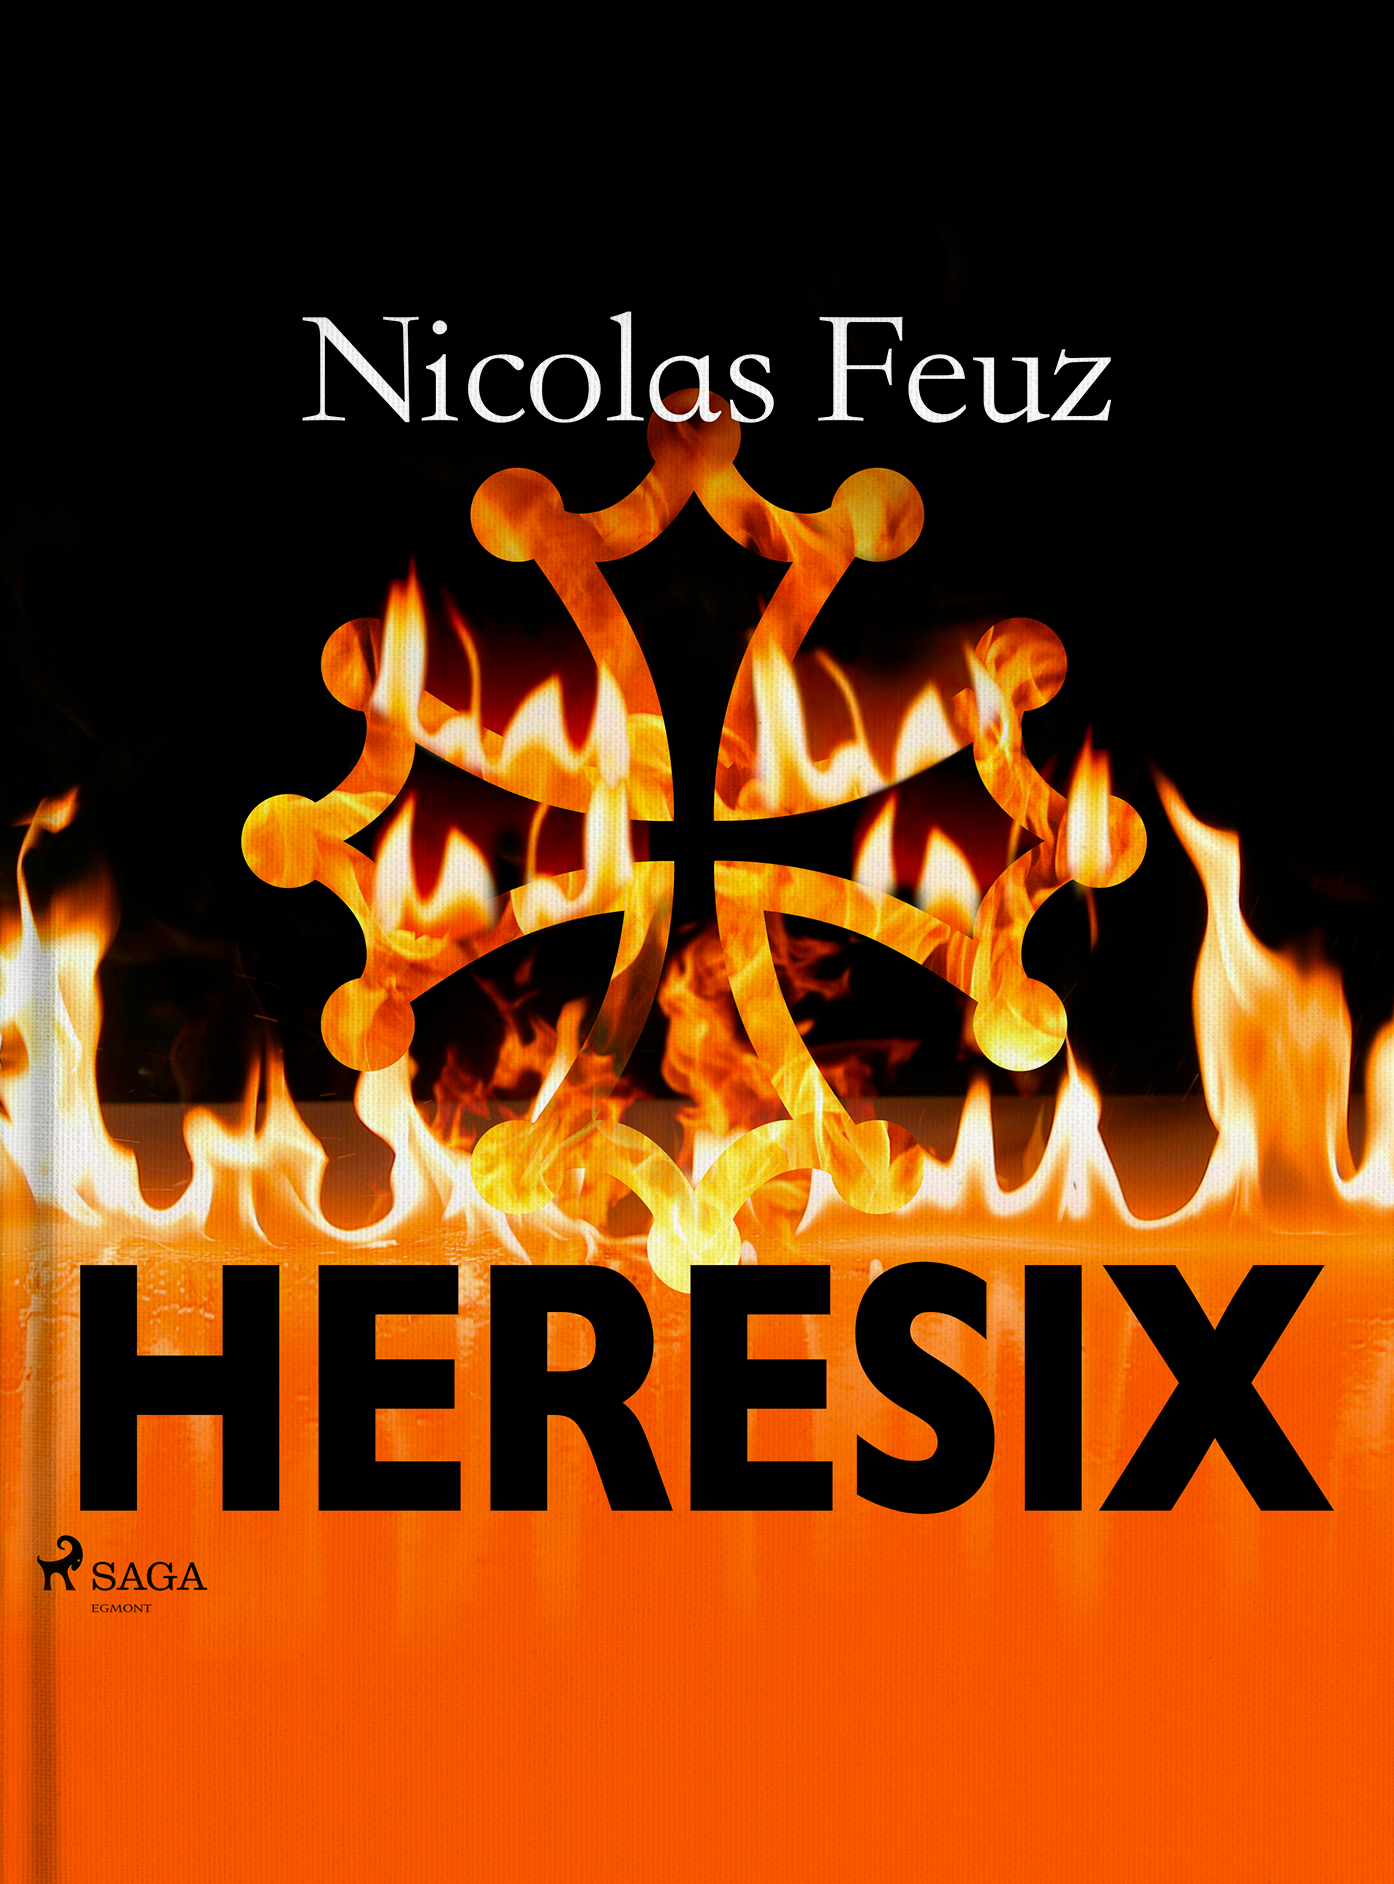 Heresix